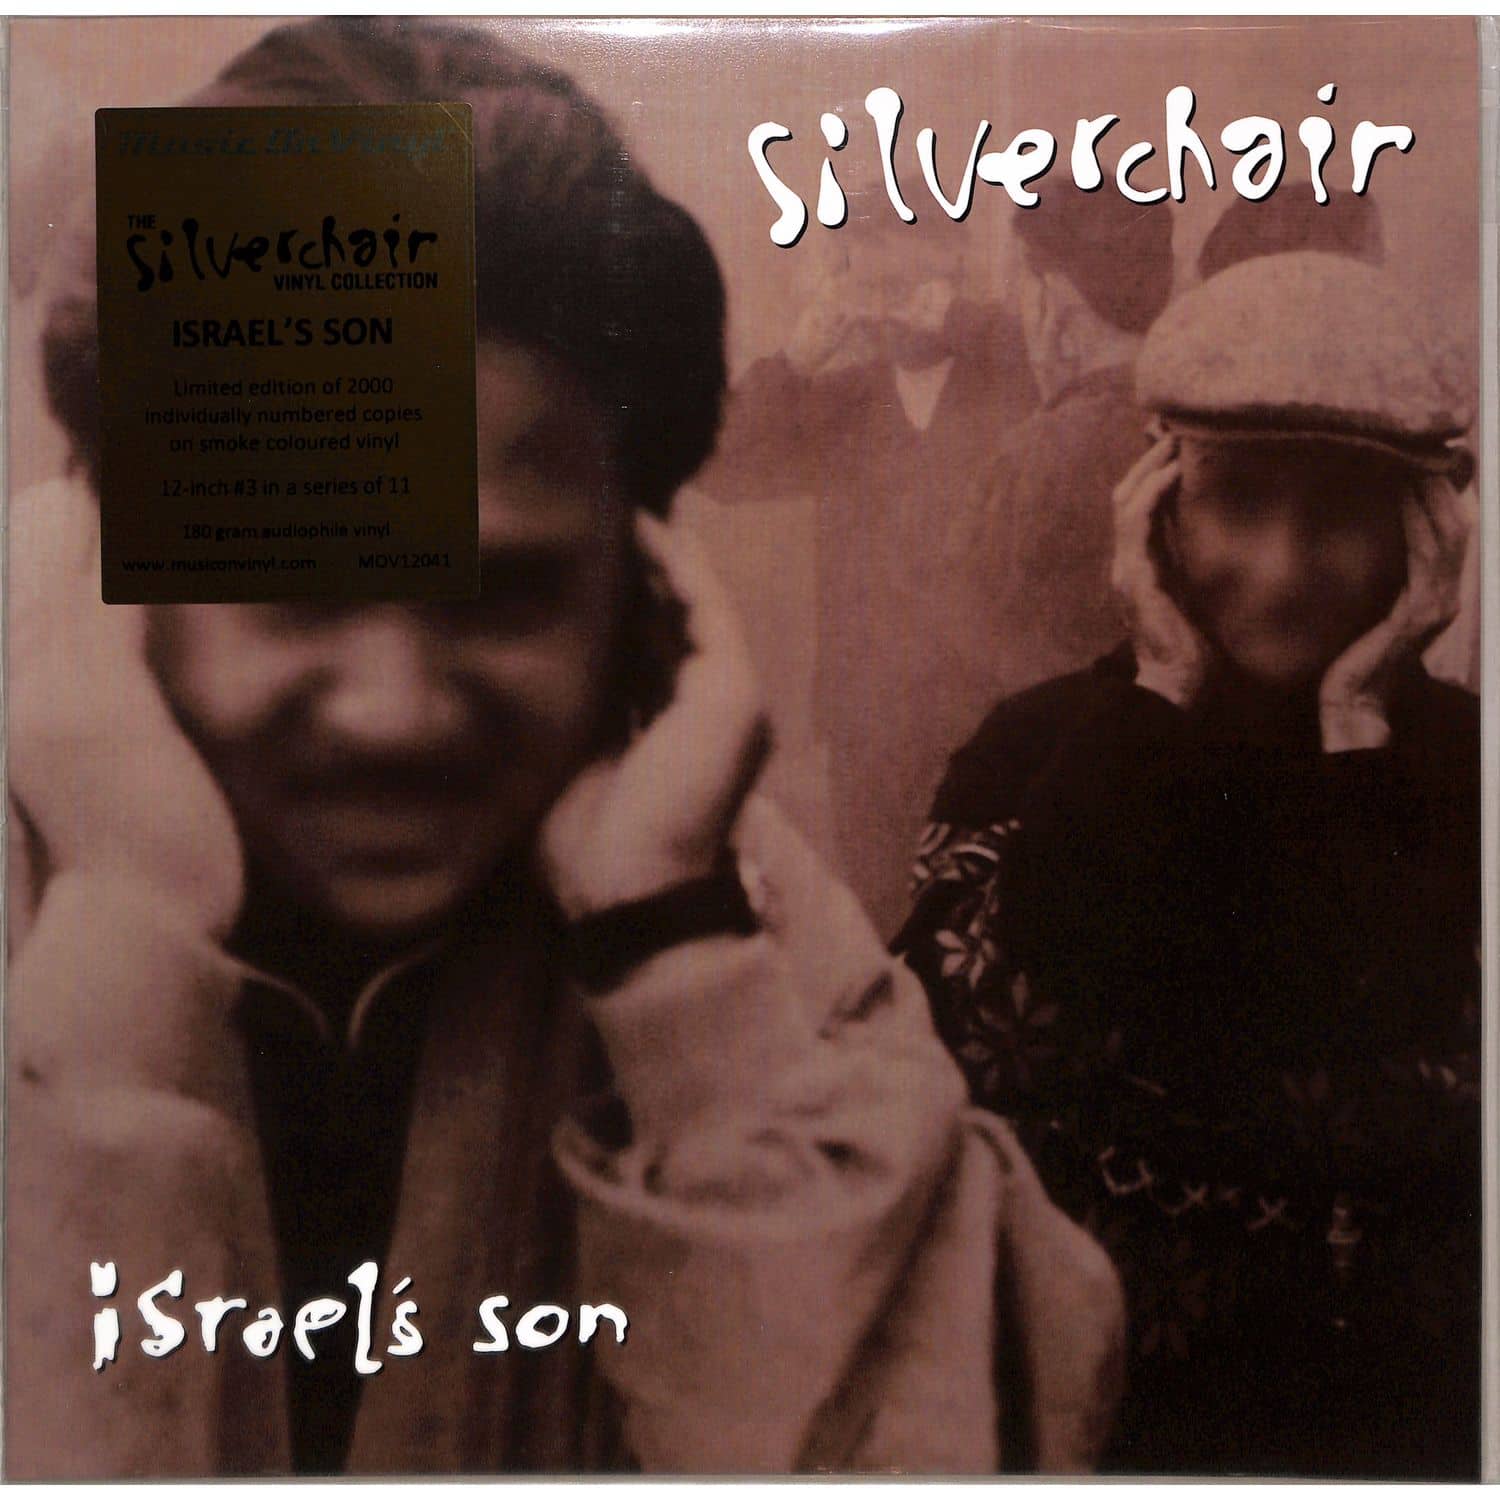 Silverchair - ISRAELS SON 